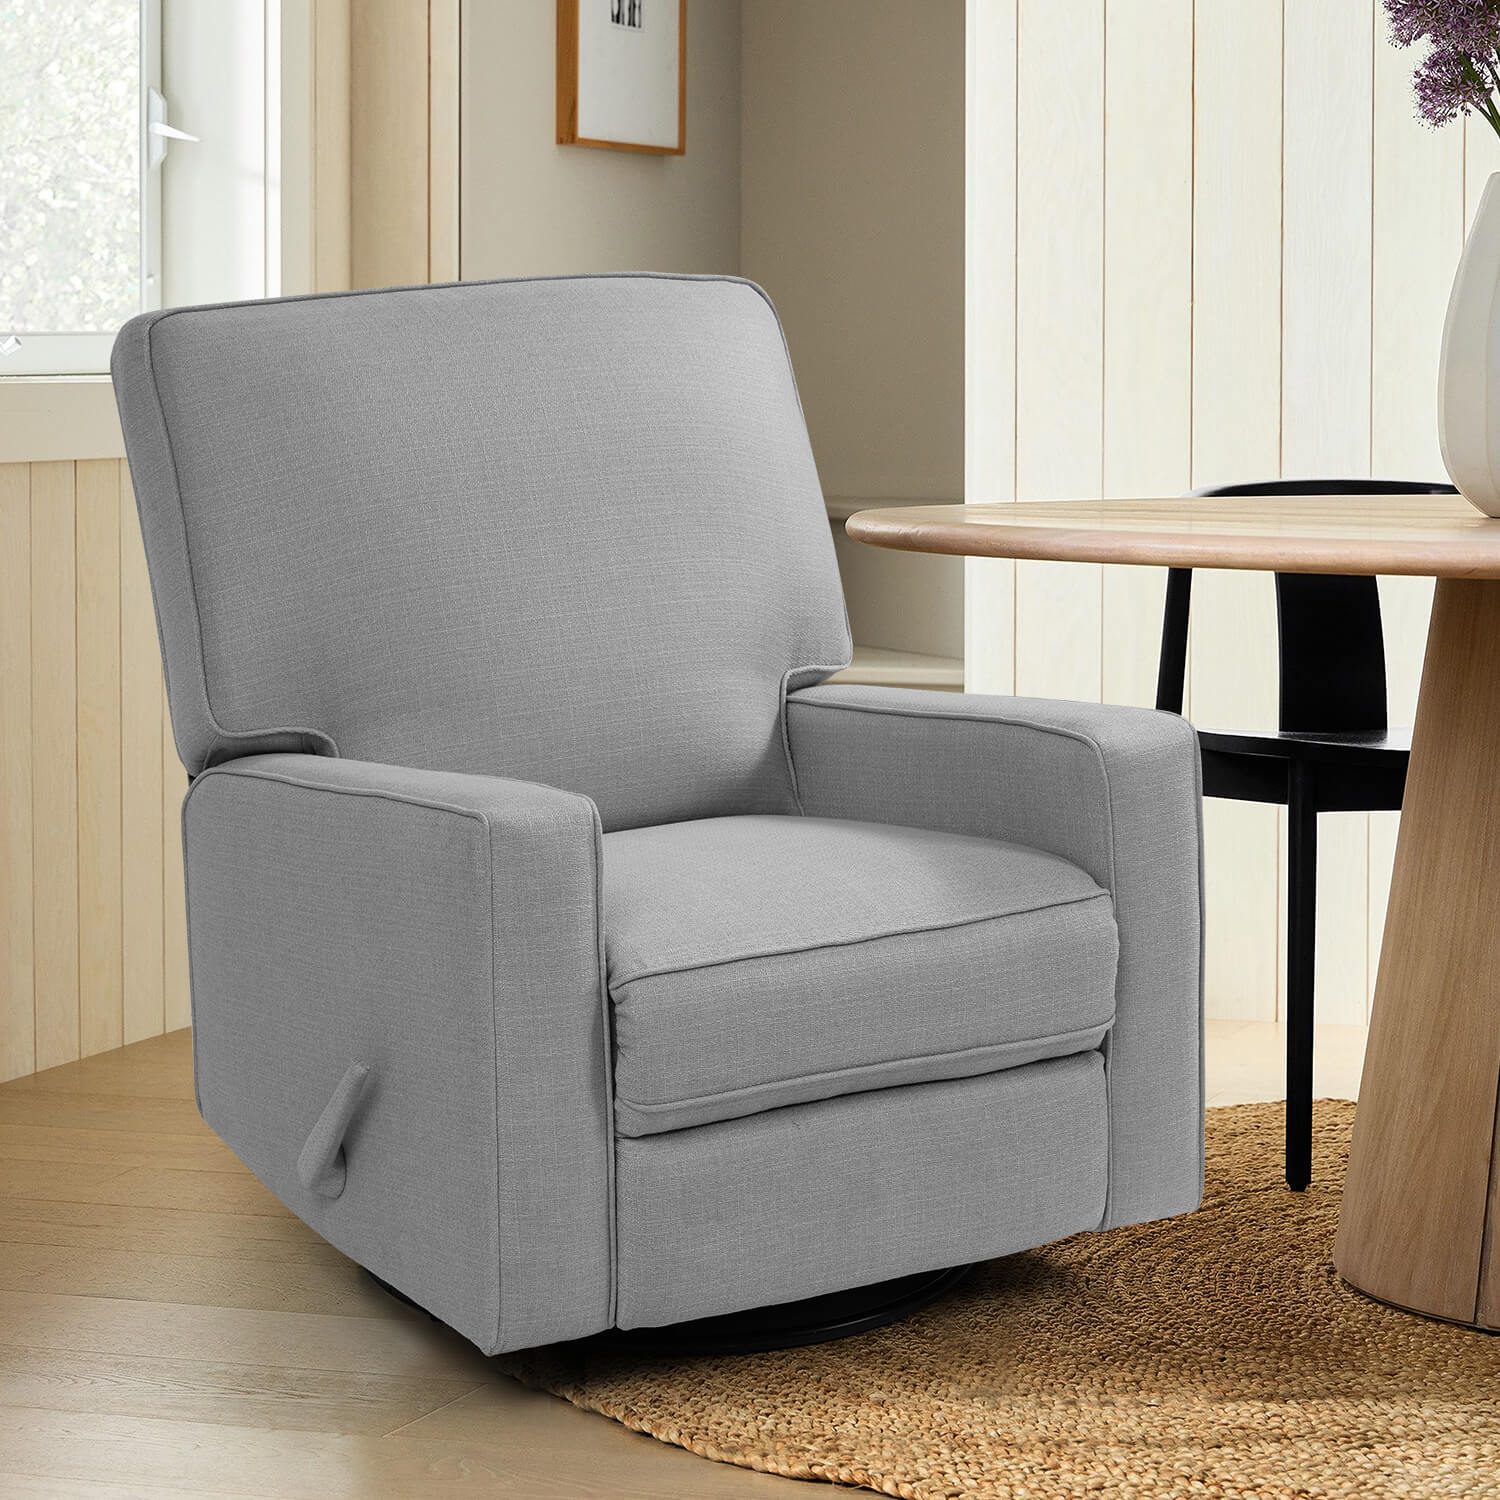 Swivel Glider Rocking Chair Manual Recliner, Grey Fabric